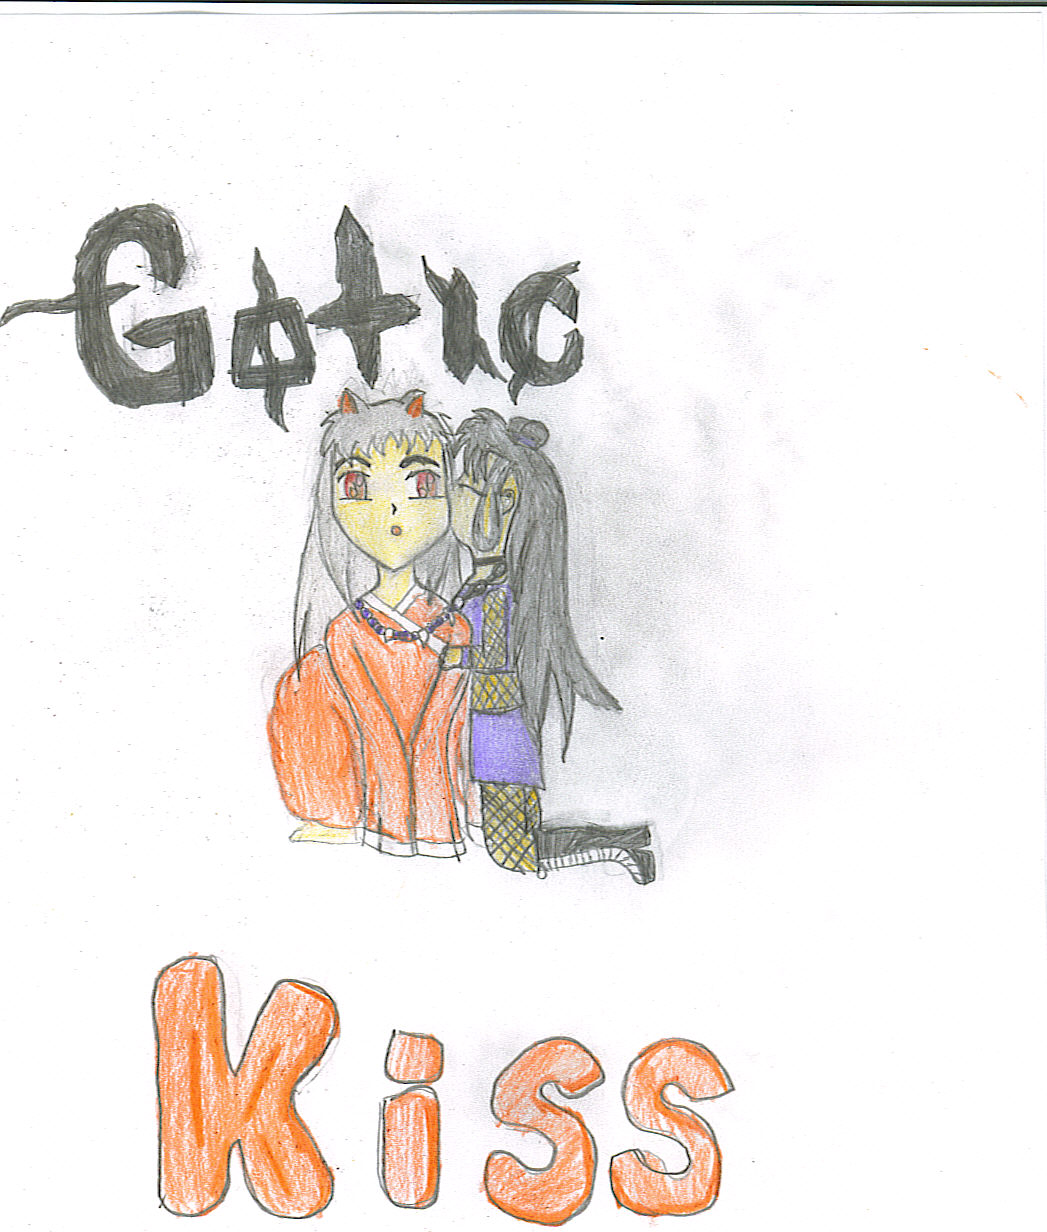 Gothic kiss by dynomite67